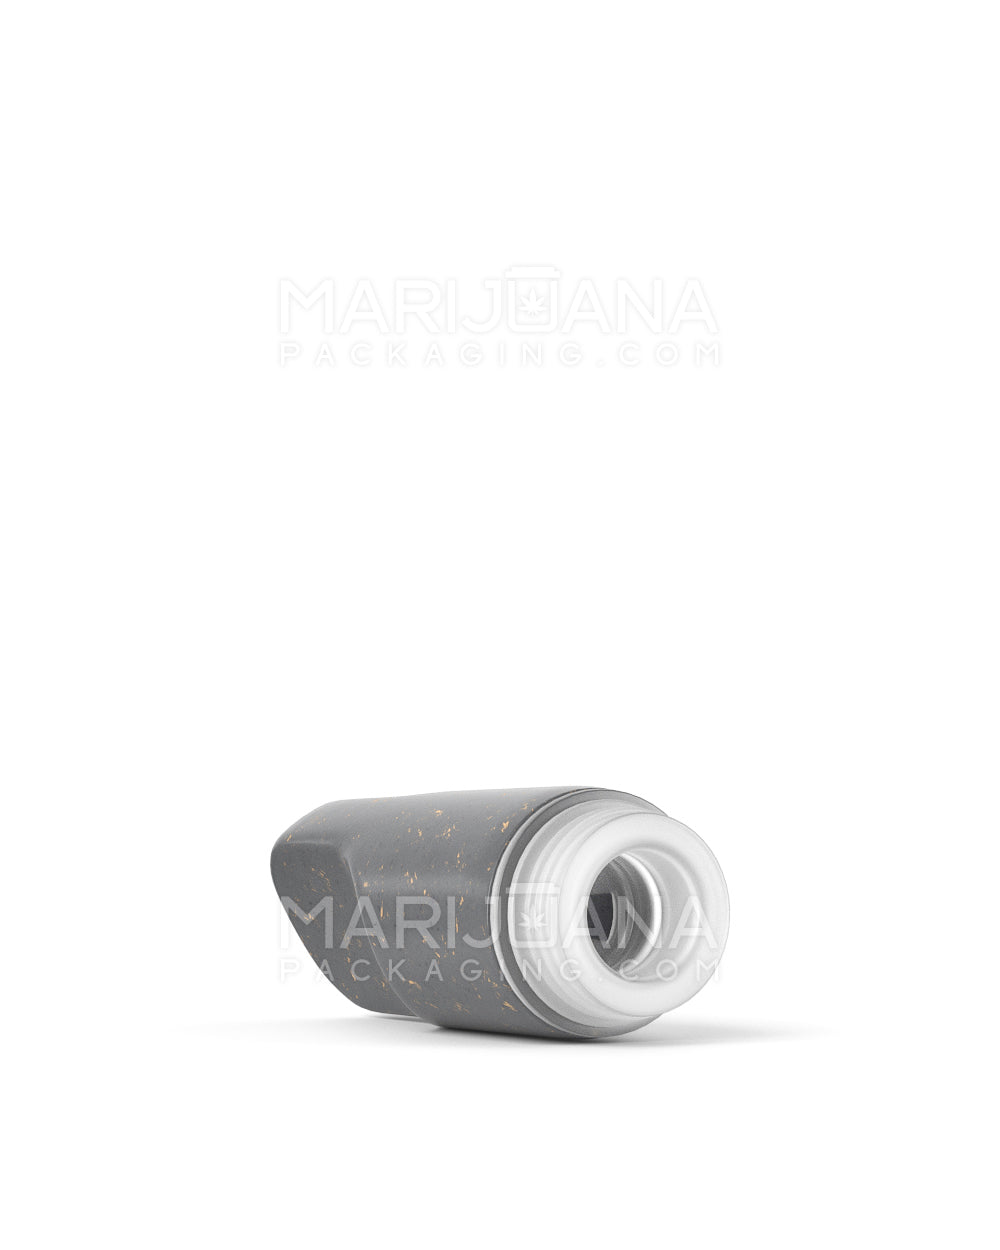 AVD | Flat Vape Mouthpiece for Glass Cartridges | Charcoal Hemp - Eazy Press - 600 Count - 6